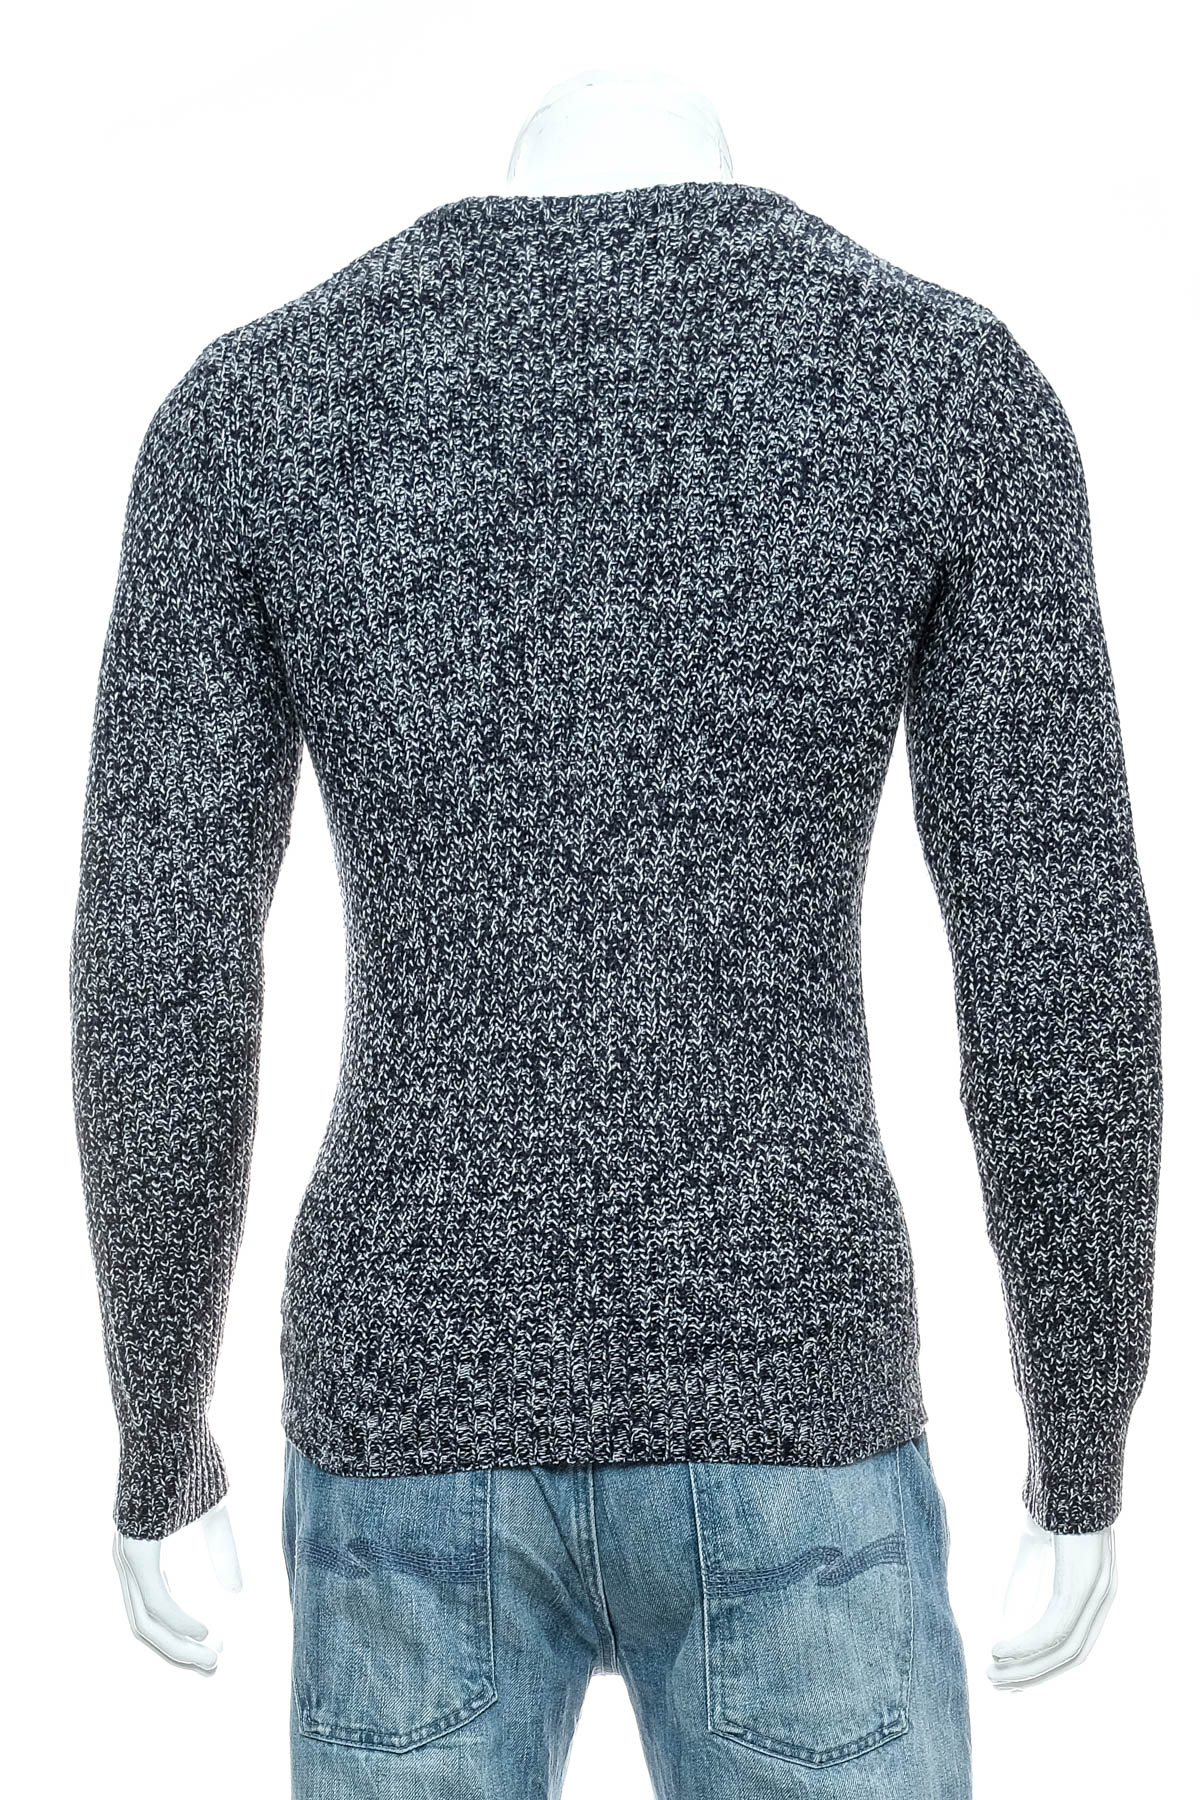 Men's sweater - Cedar Wood State - 1